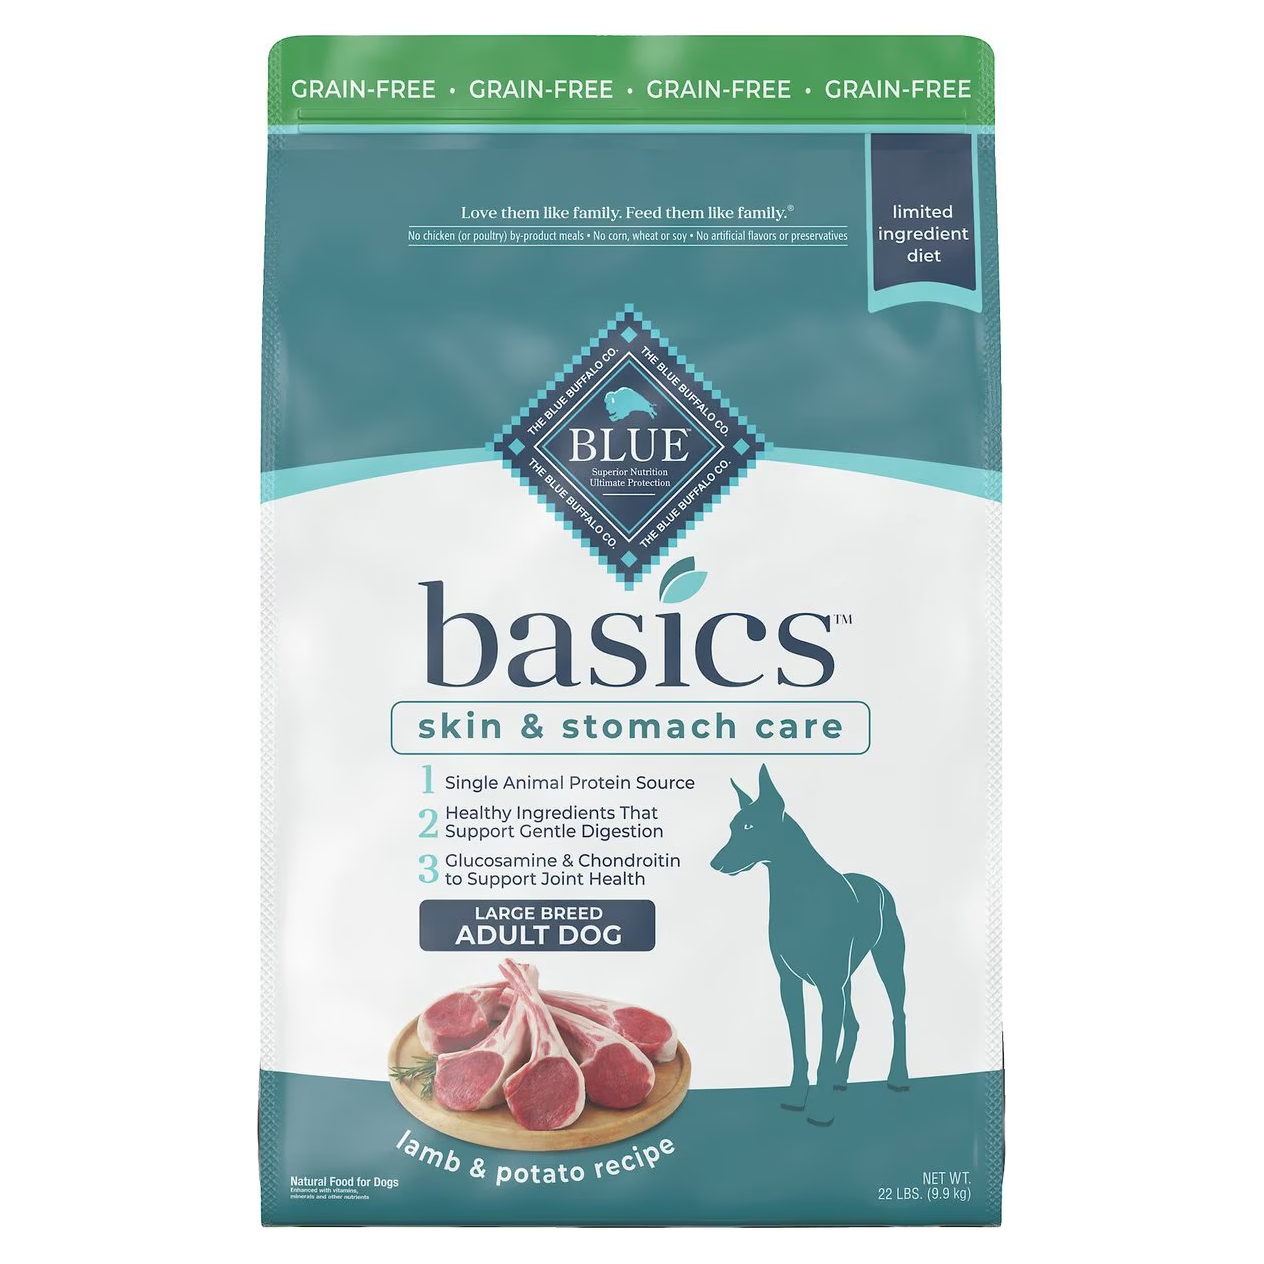 Blue Buffalo Limited Grain-Free Lamb & Potato Dog Food